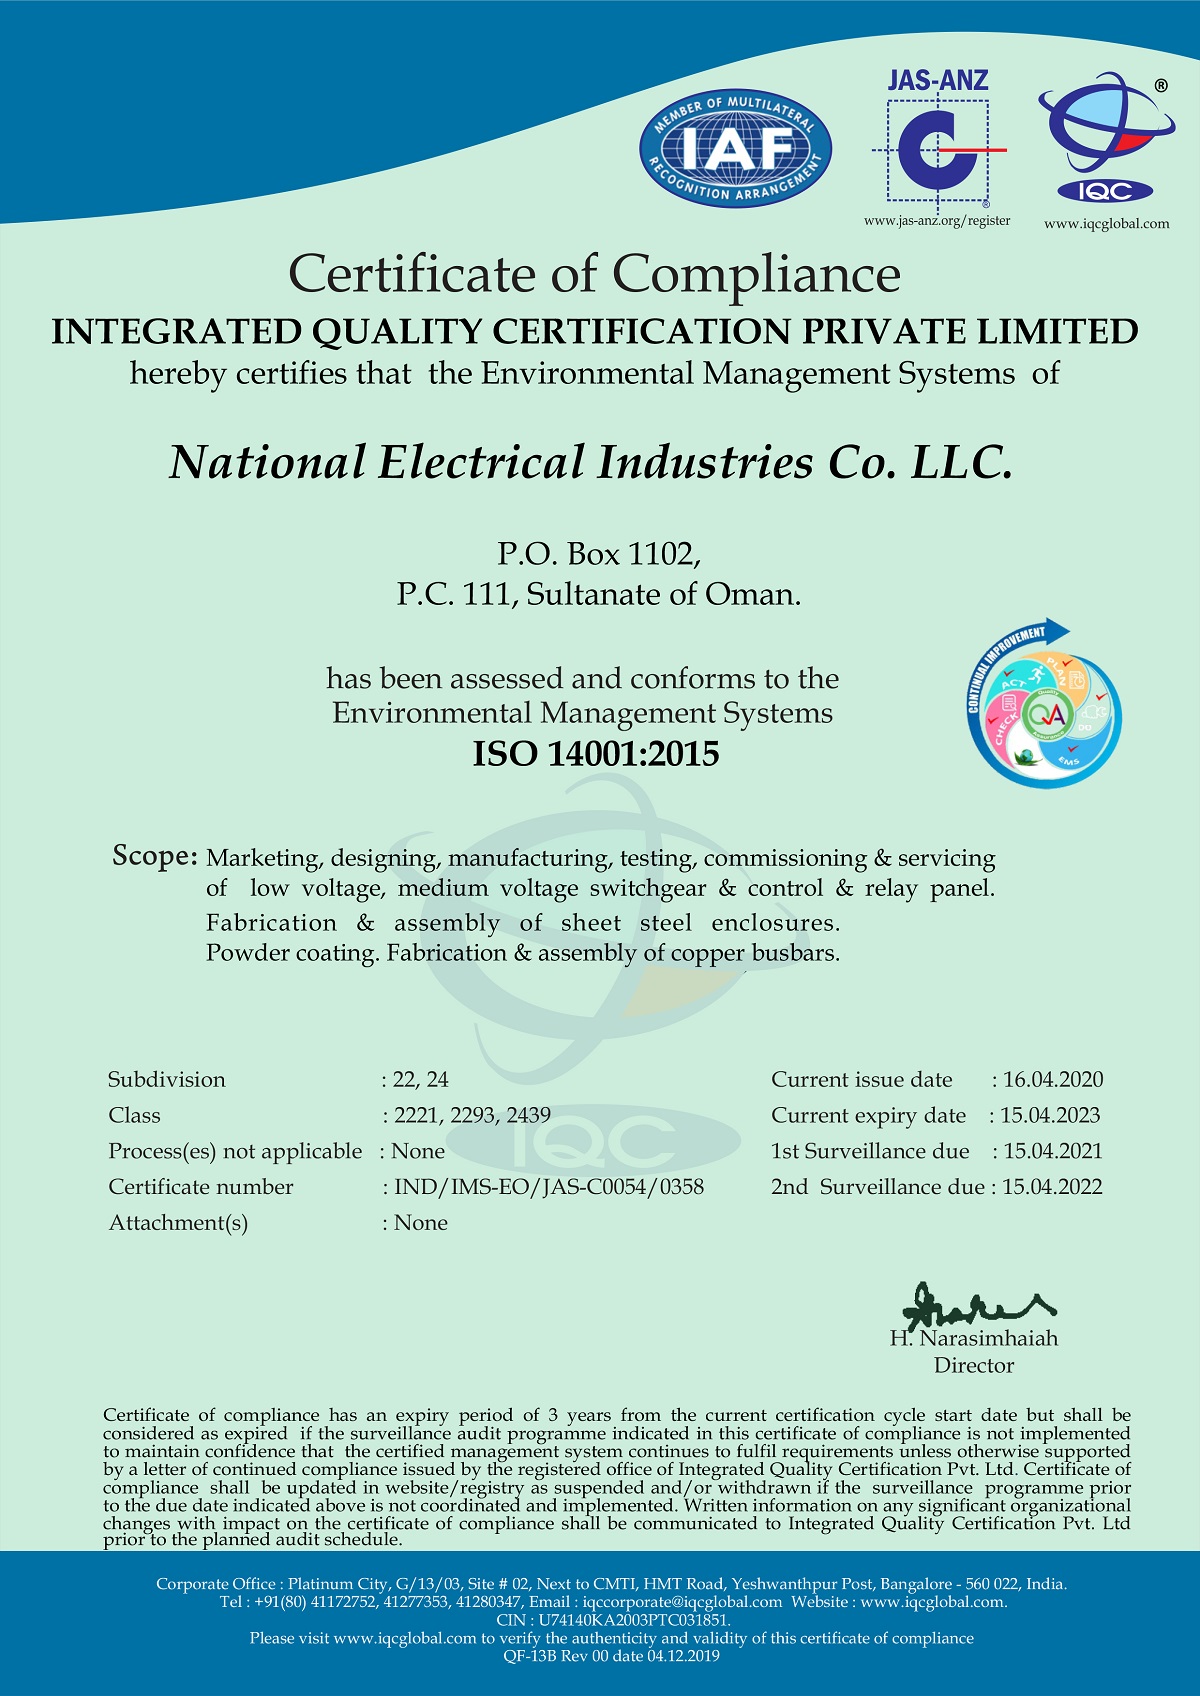 NEI OMAN - ISO 14001:2015